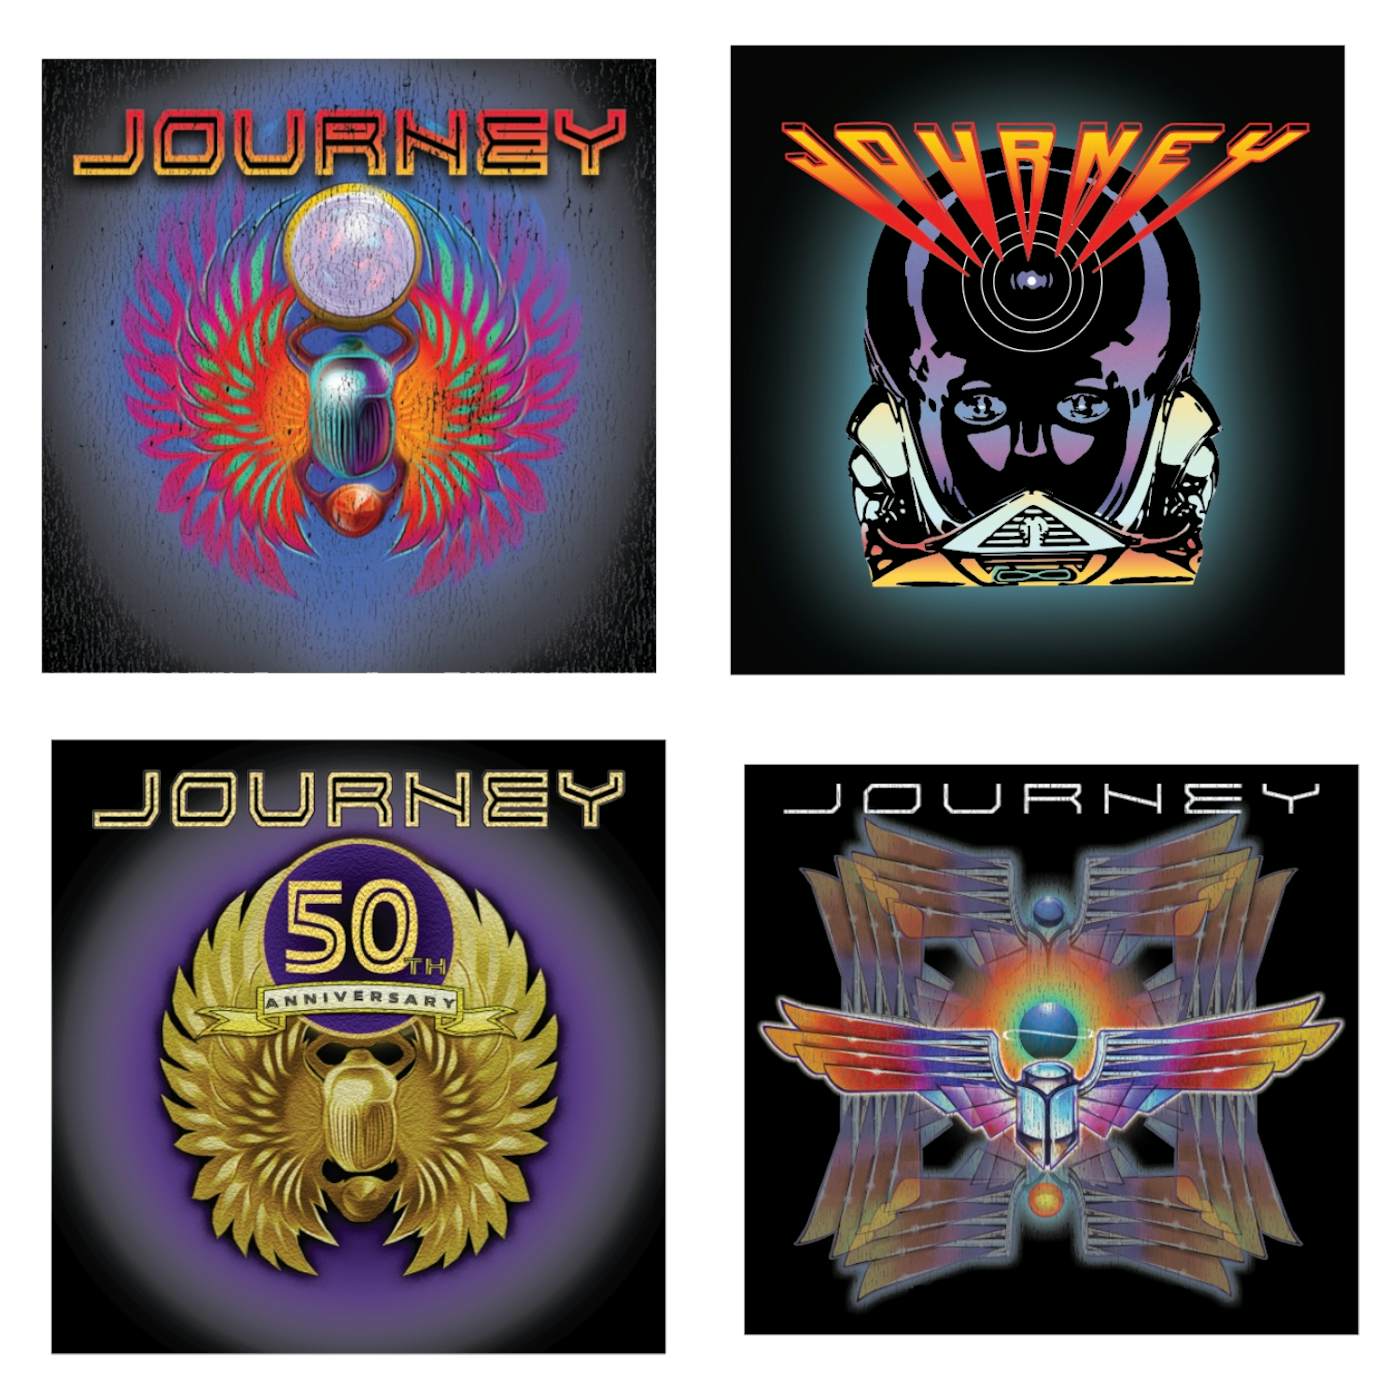 Journey 50th Anniversary Sticker Pack